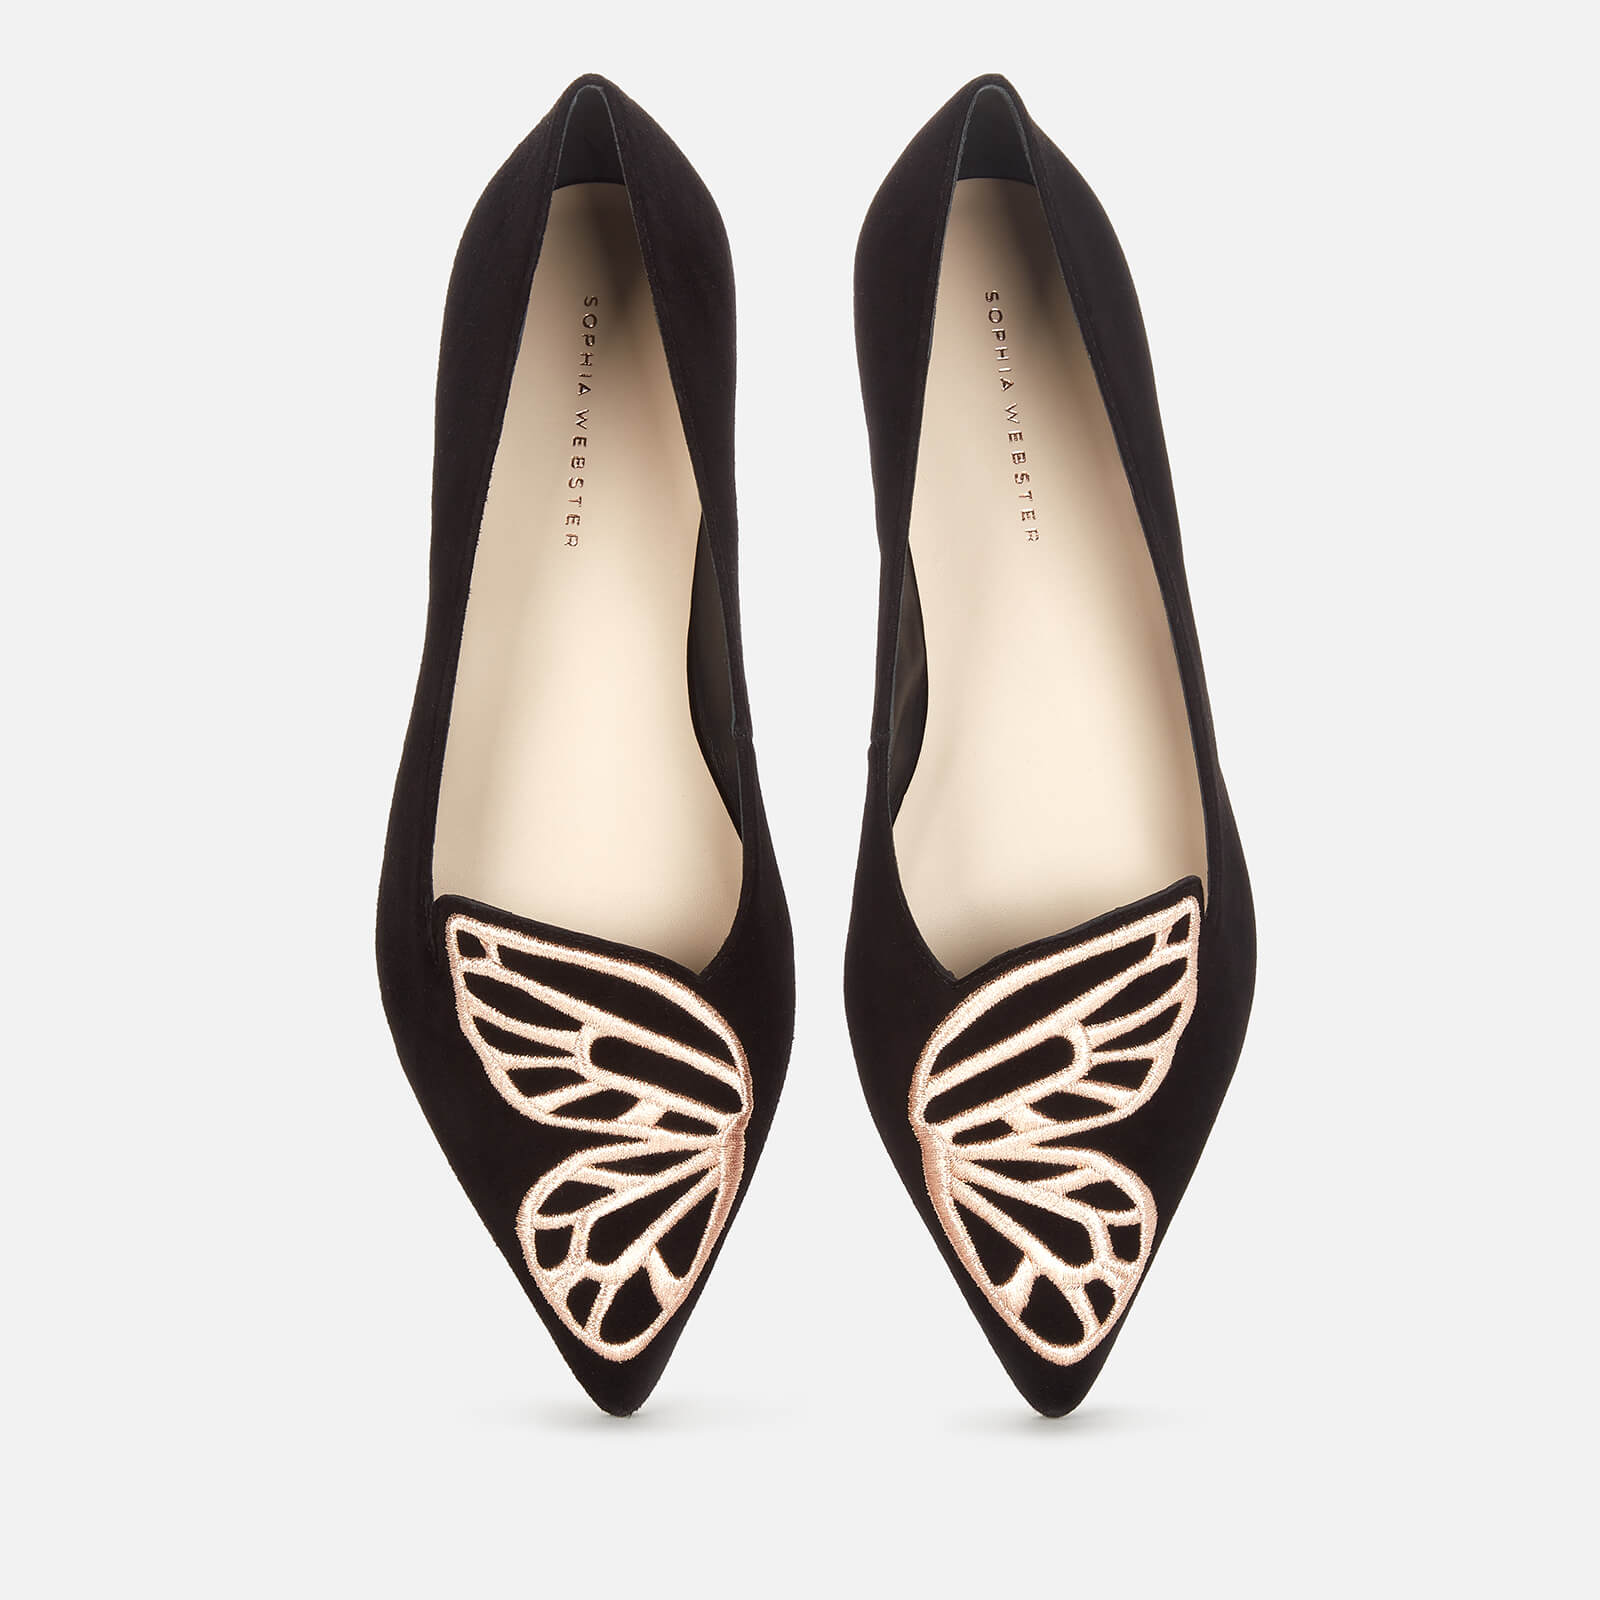 Sophia Webster Women's Butterfly Pointed Flats - Black/Rose Gold - UK 8